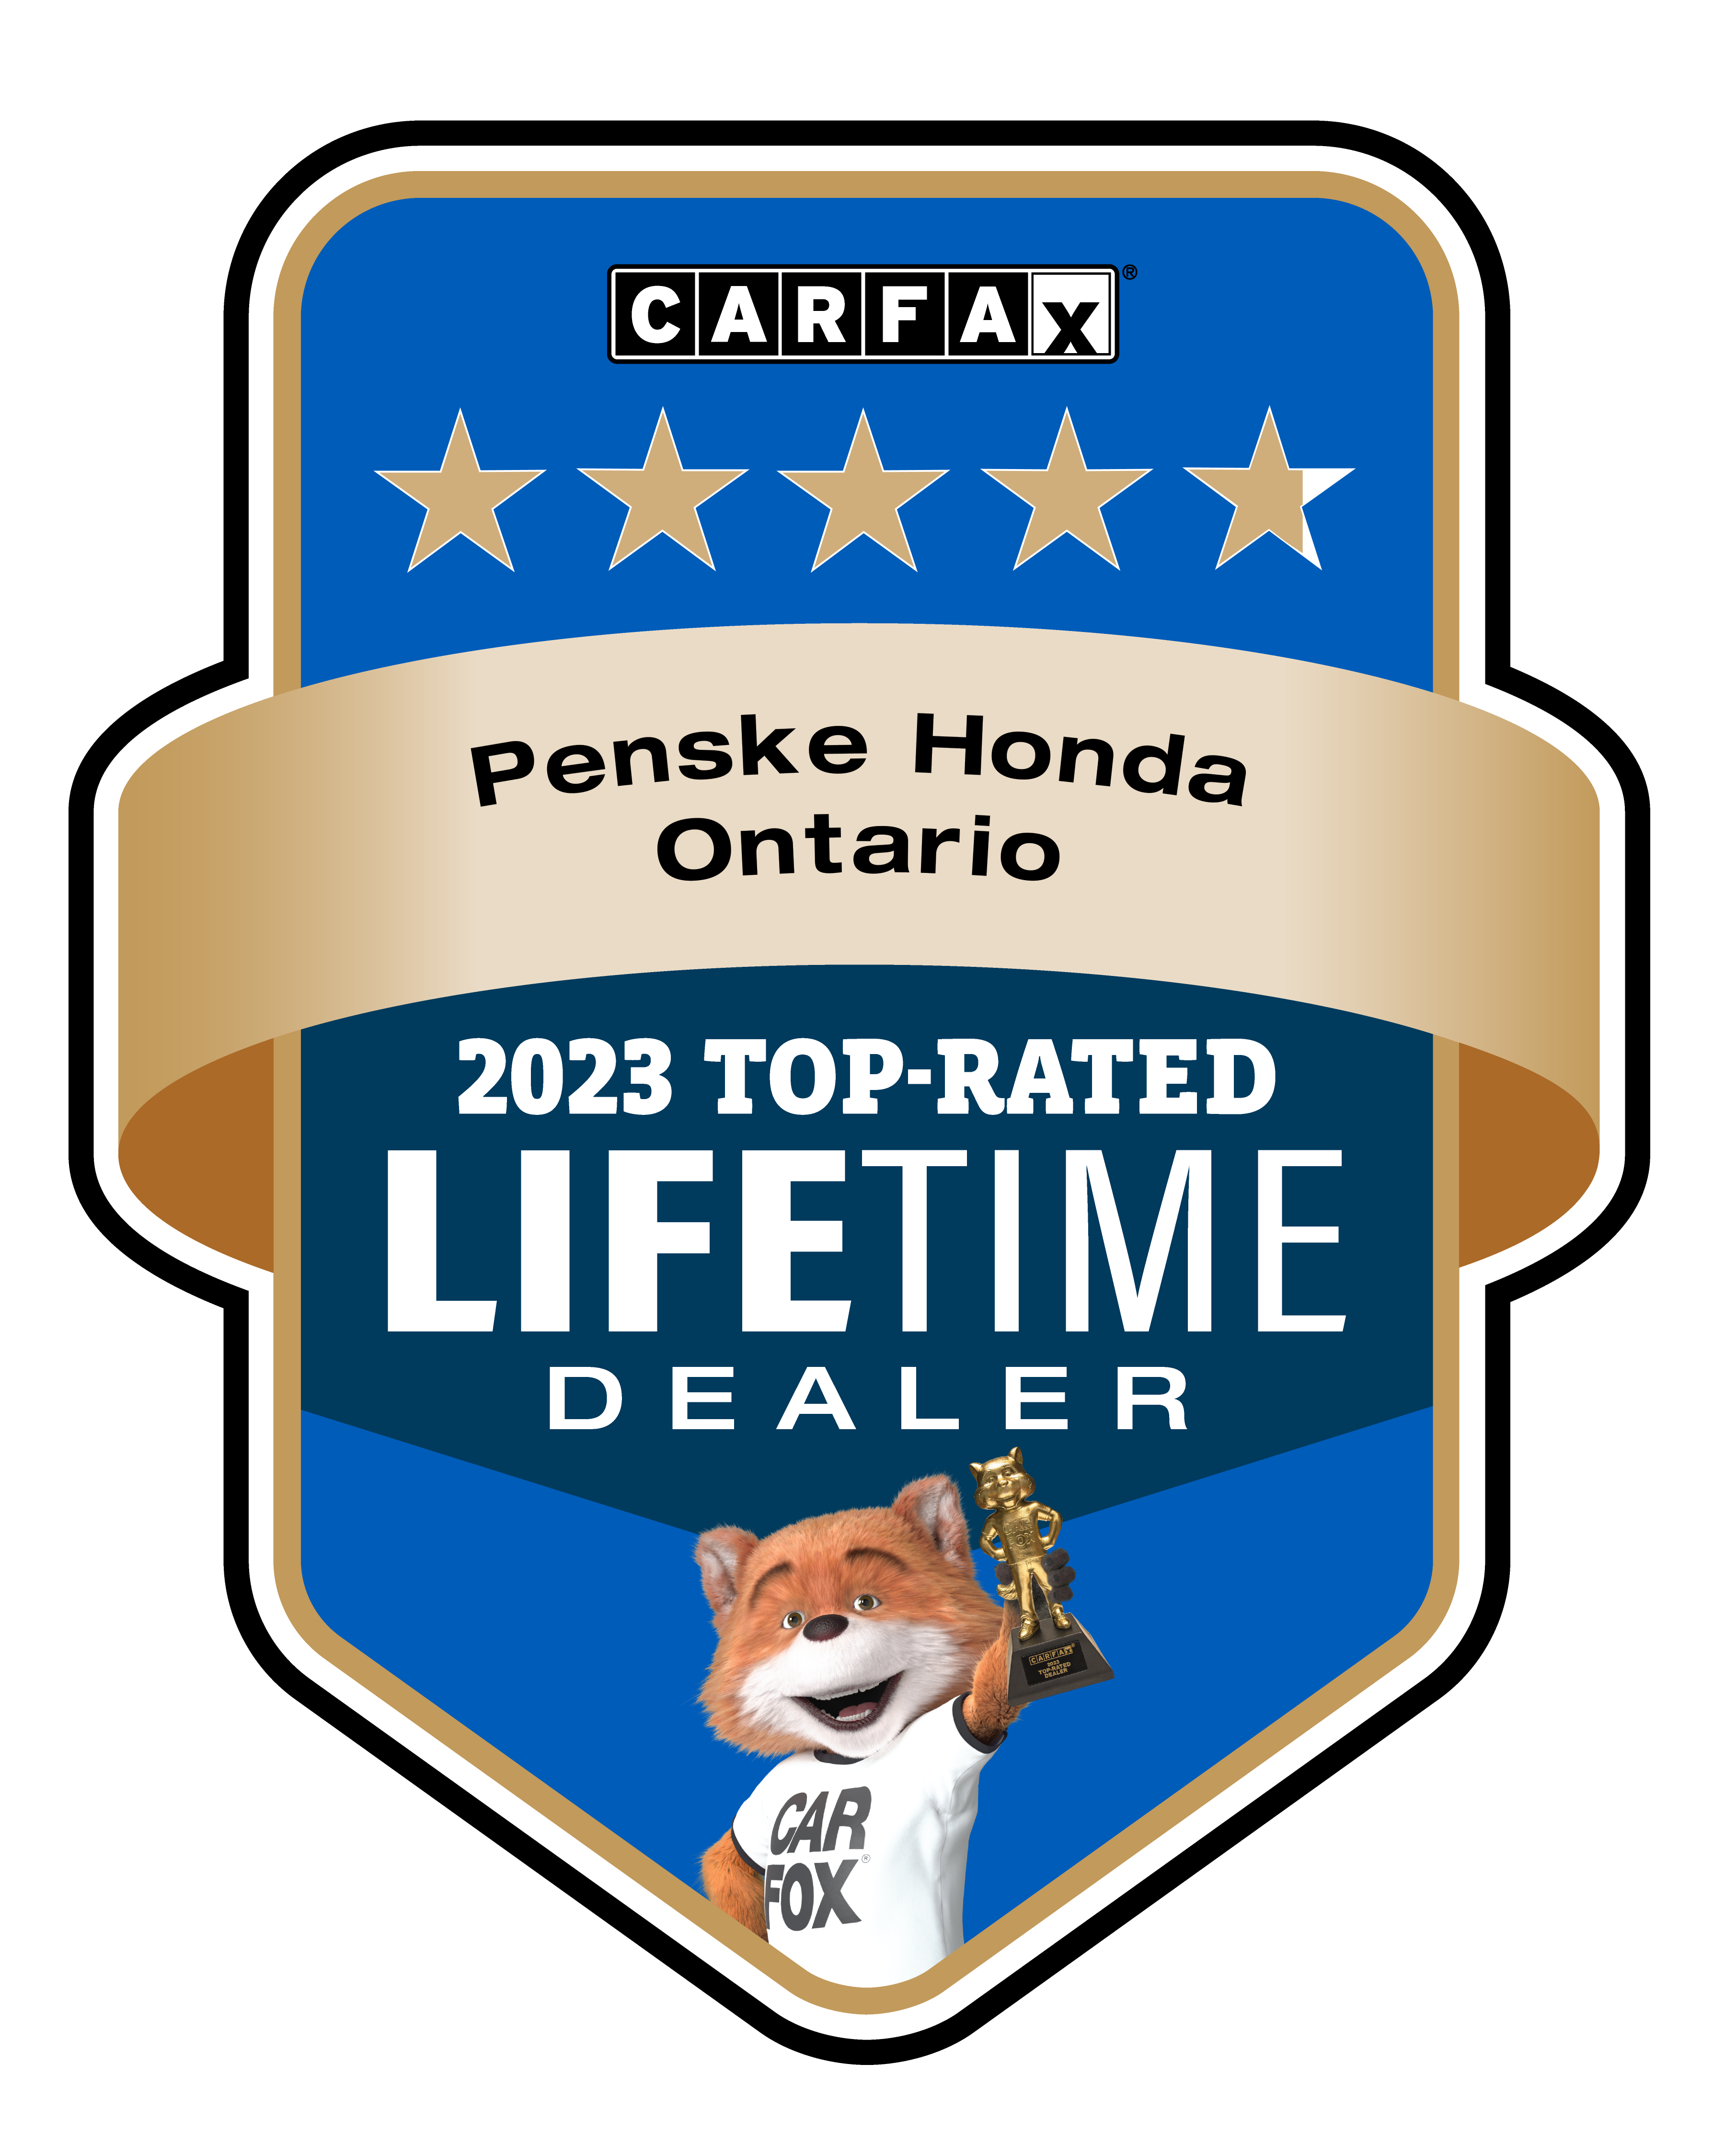 Penske Honda Ontario in Ontario, CA is CarFax Top Rated Dealer of the Year 2023